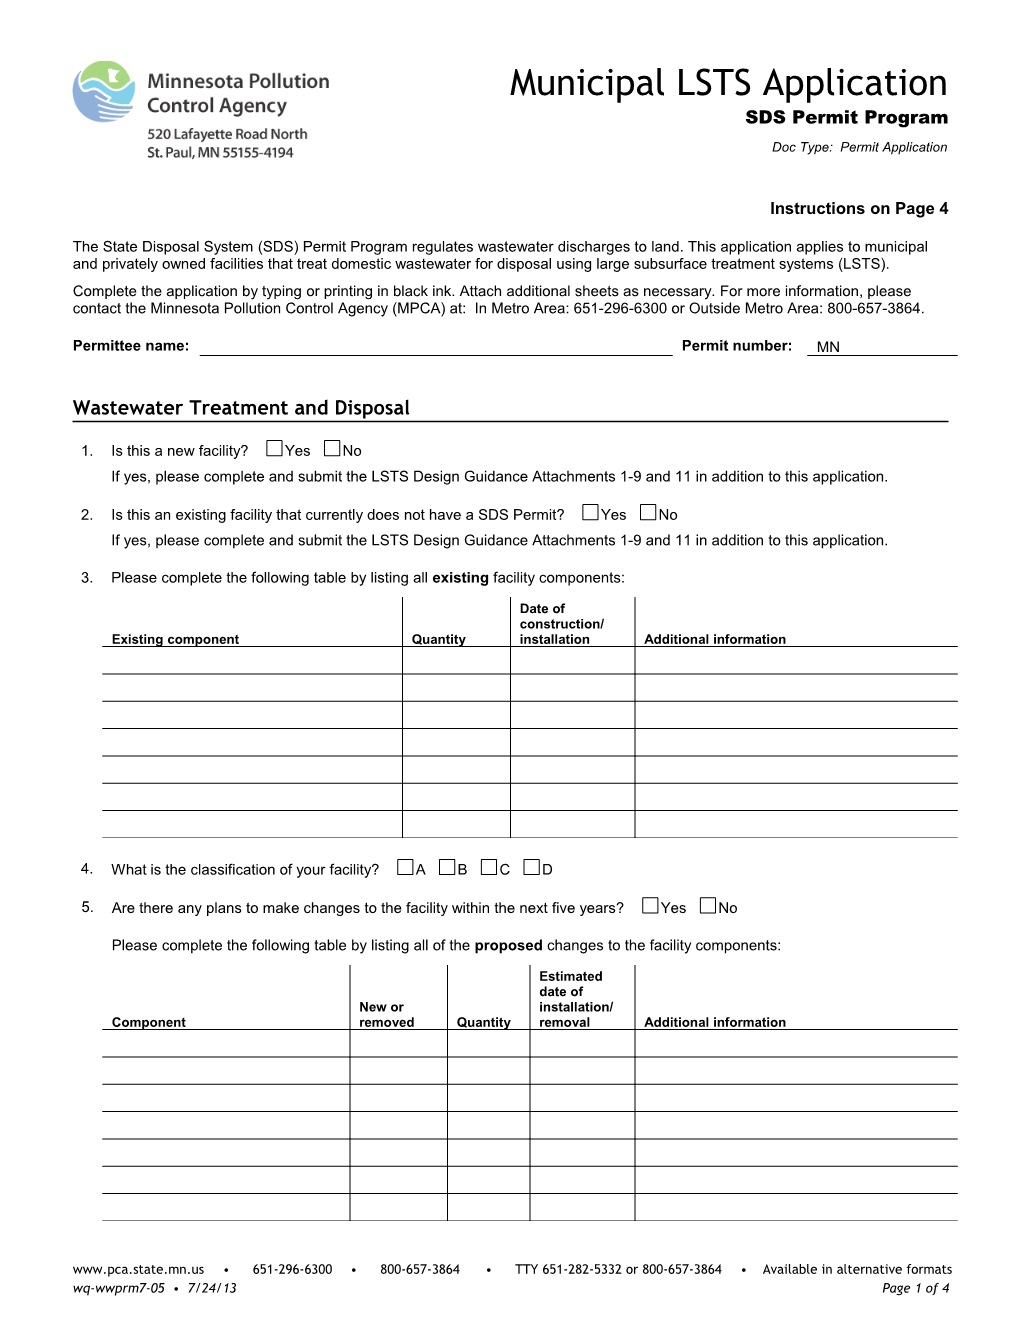 Municipal LSTS Application - SDS Permit Program Form